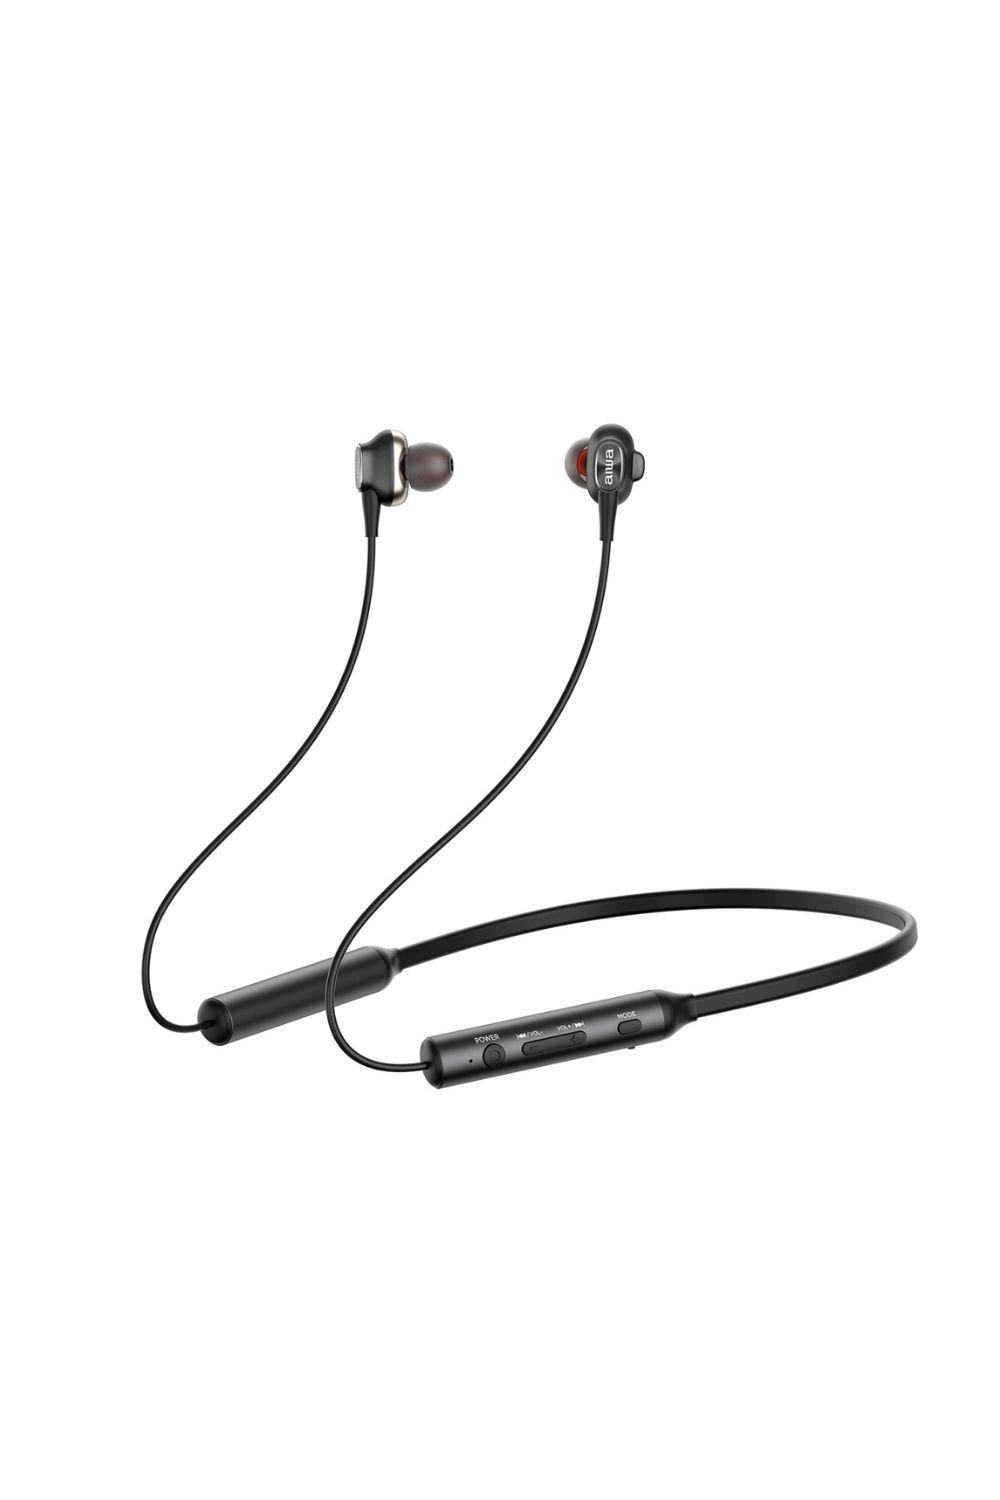 ESTBT-450 Wireless In-Ear Headphones